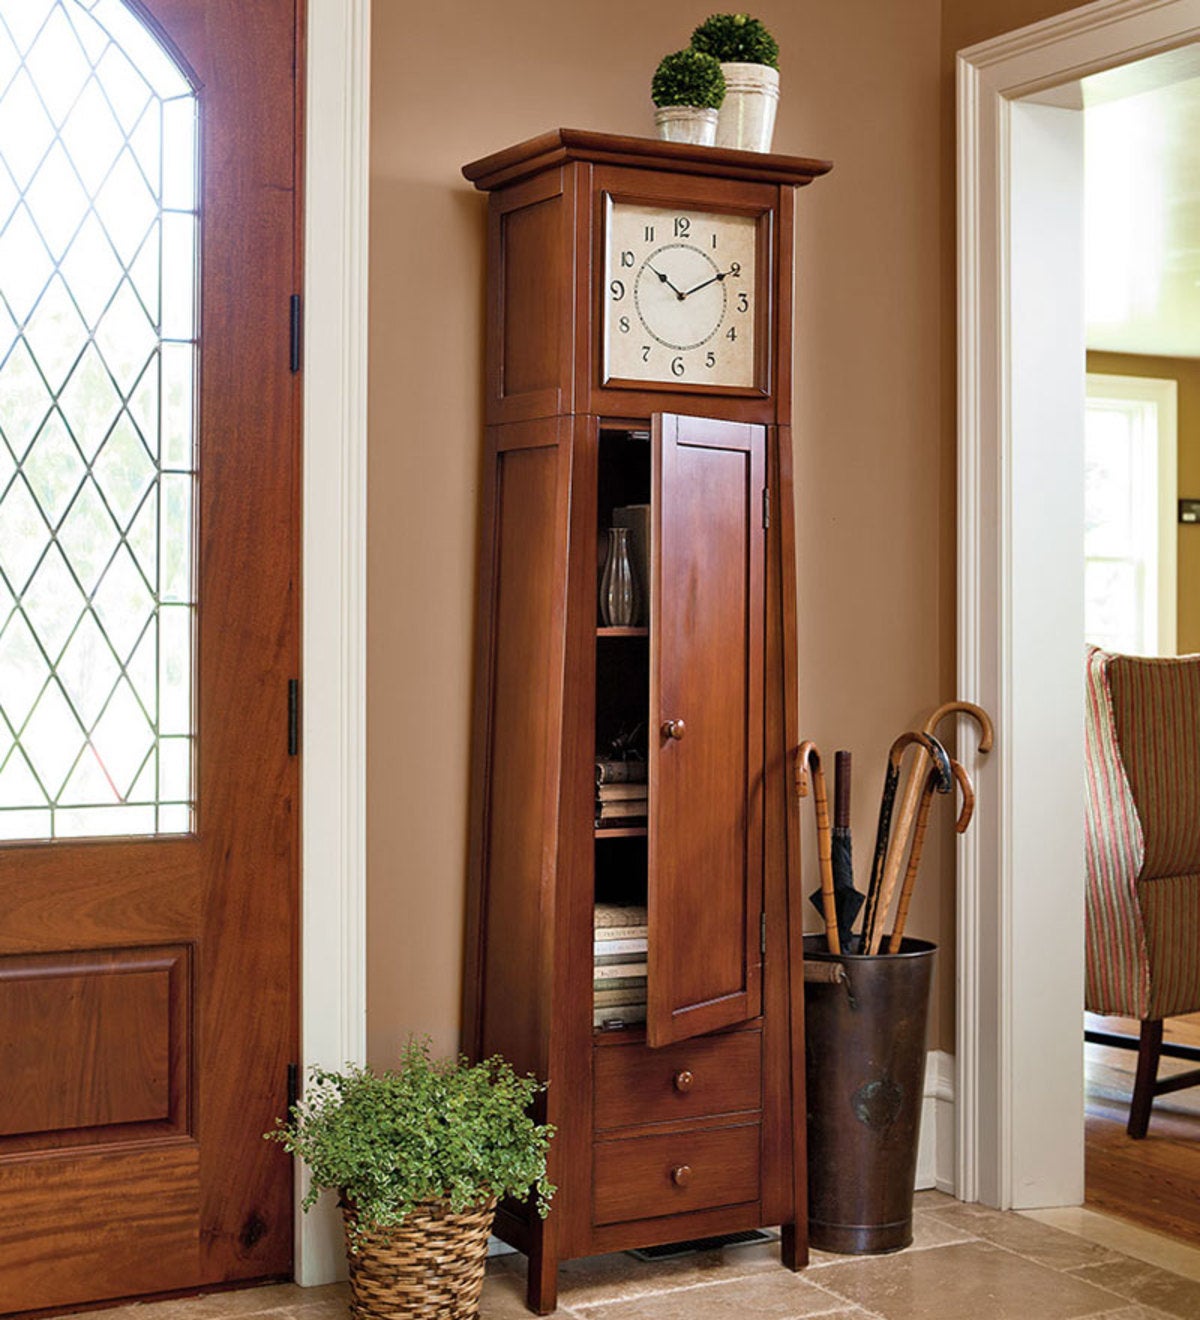 L-5 Antique Narrow Cabinet Door or Case Lock or Grandfather Clock